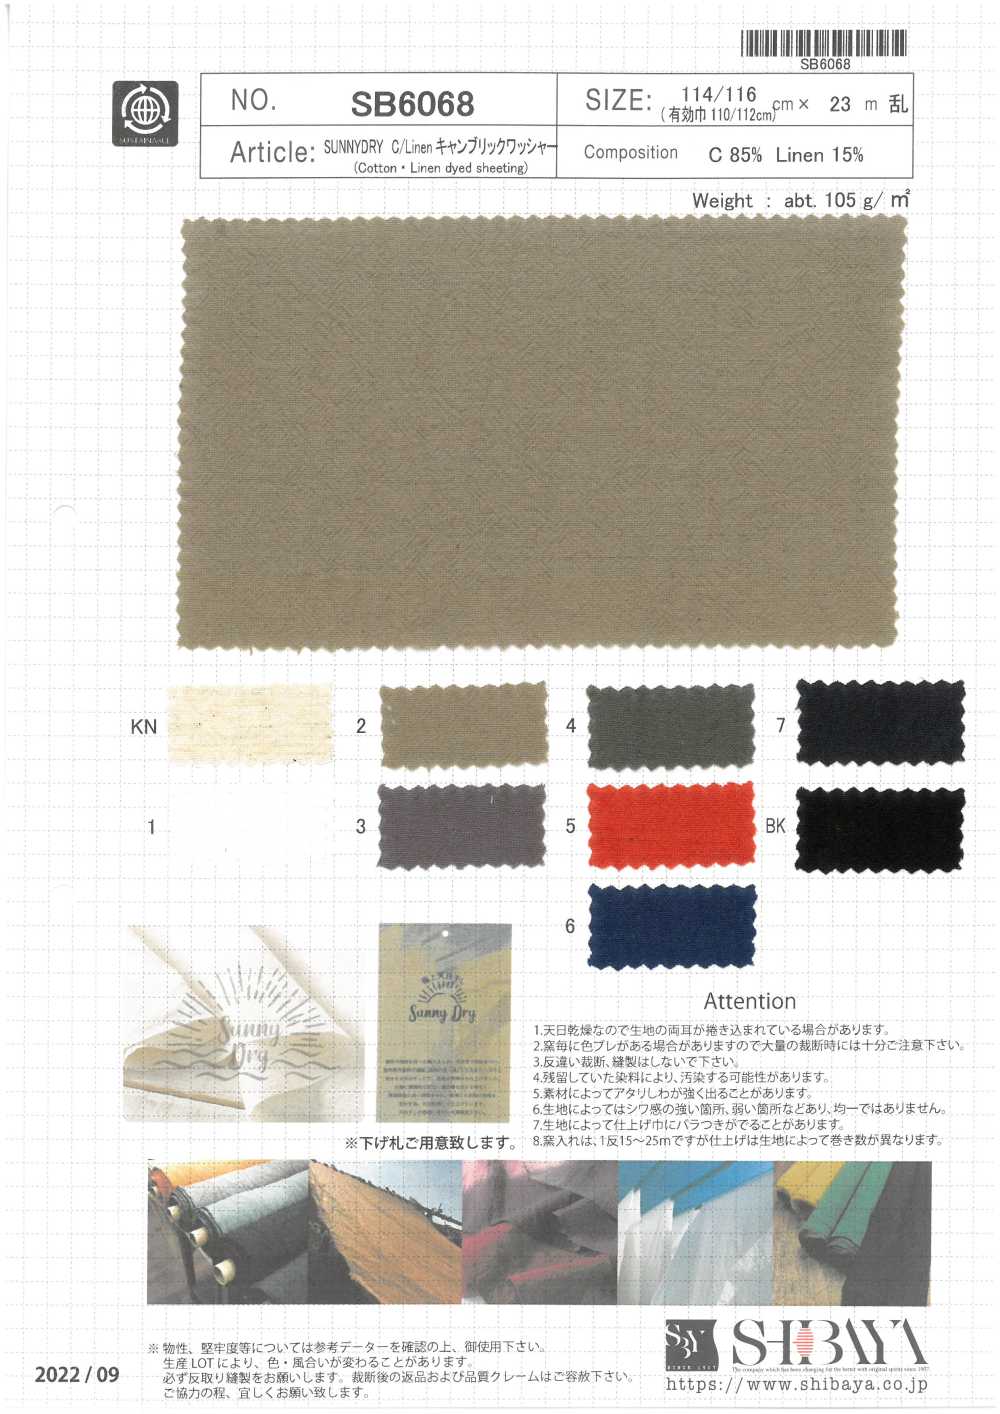 SB6068 SUNNYDRY Baumwoll-Leinen-Cambric-Waschmaschinenverarbeitung[Textilgewebe] SHIBAYA